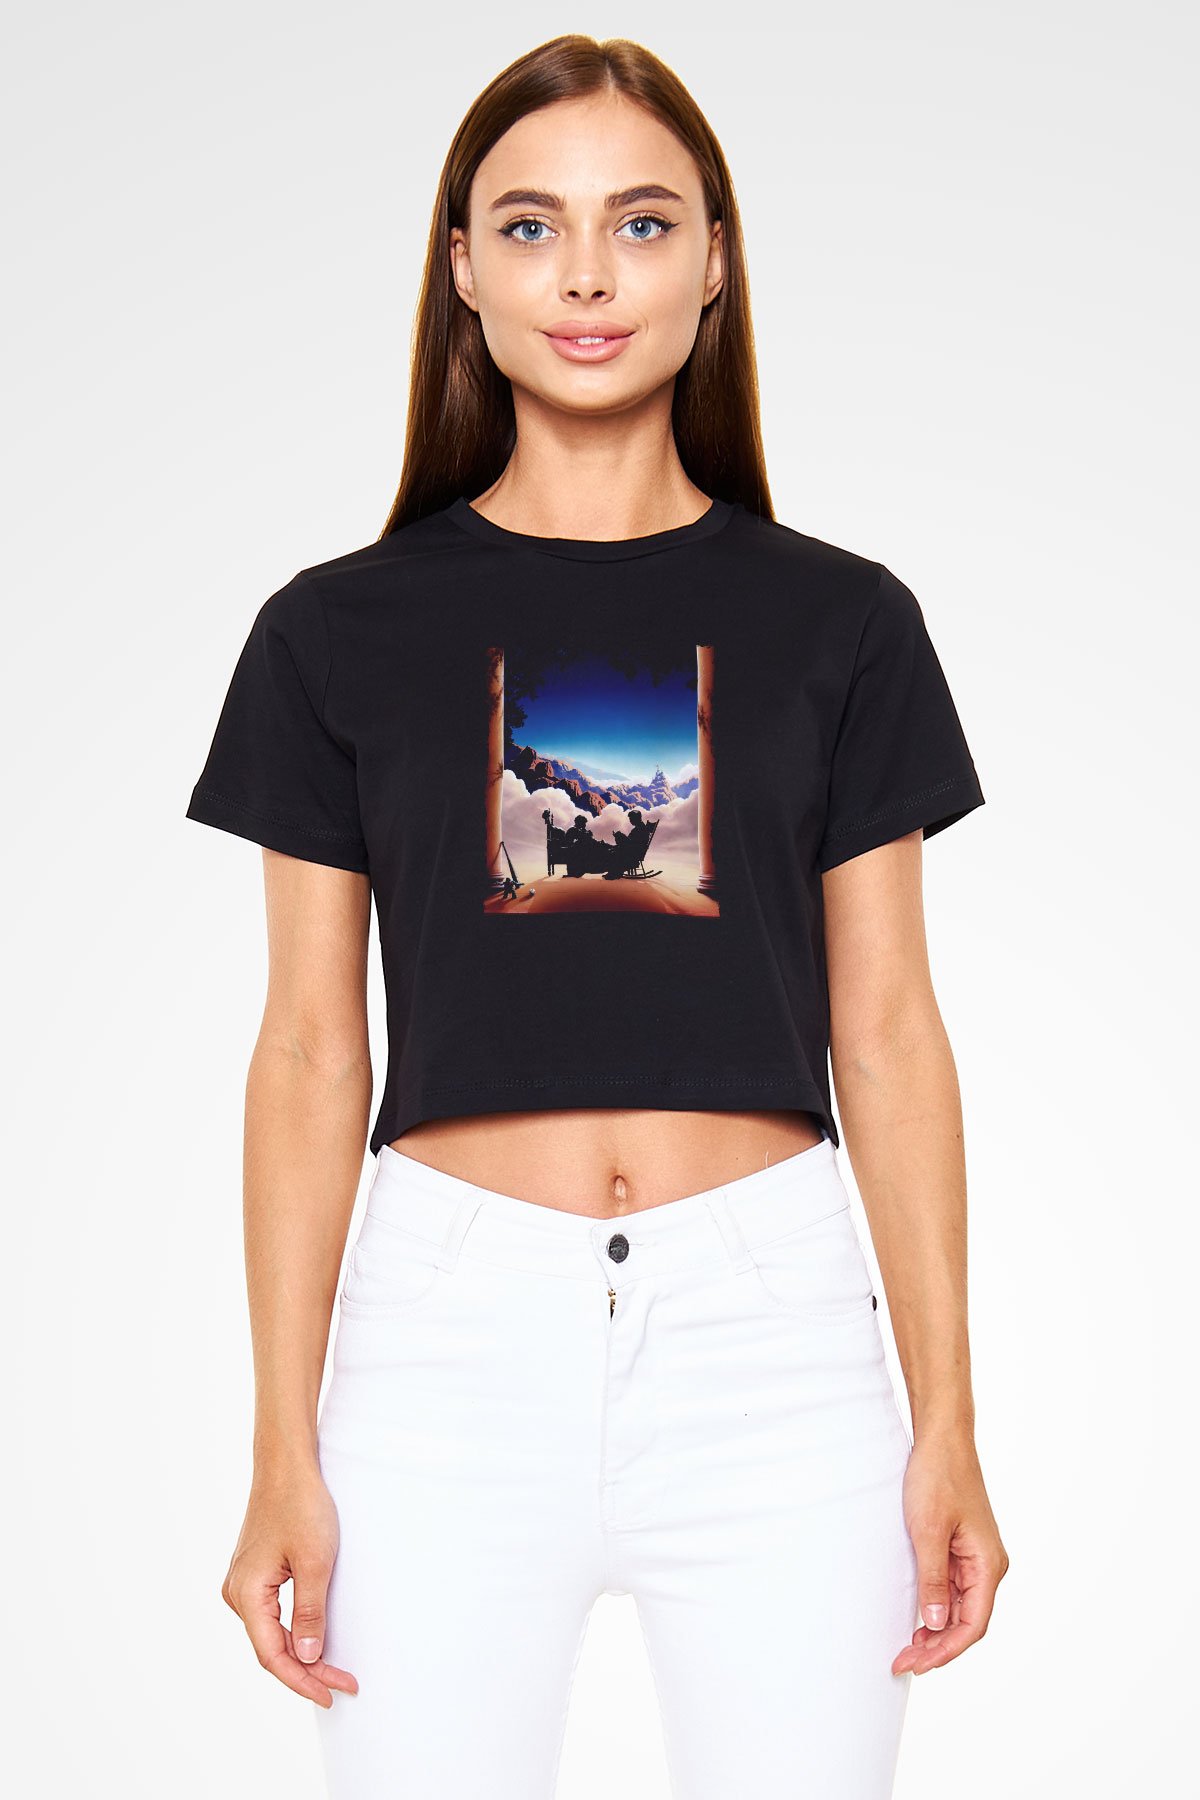 Unisex Prenses Gelin (The Princess Bride) Baskılı Siyah Crop Top T-shirt